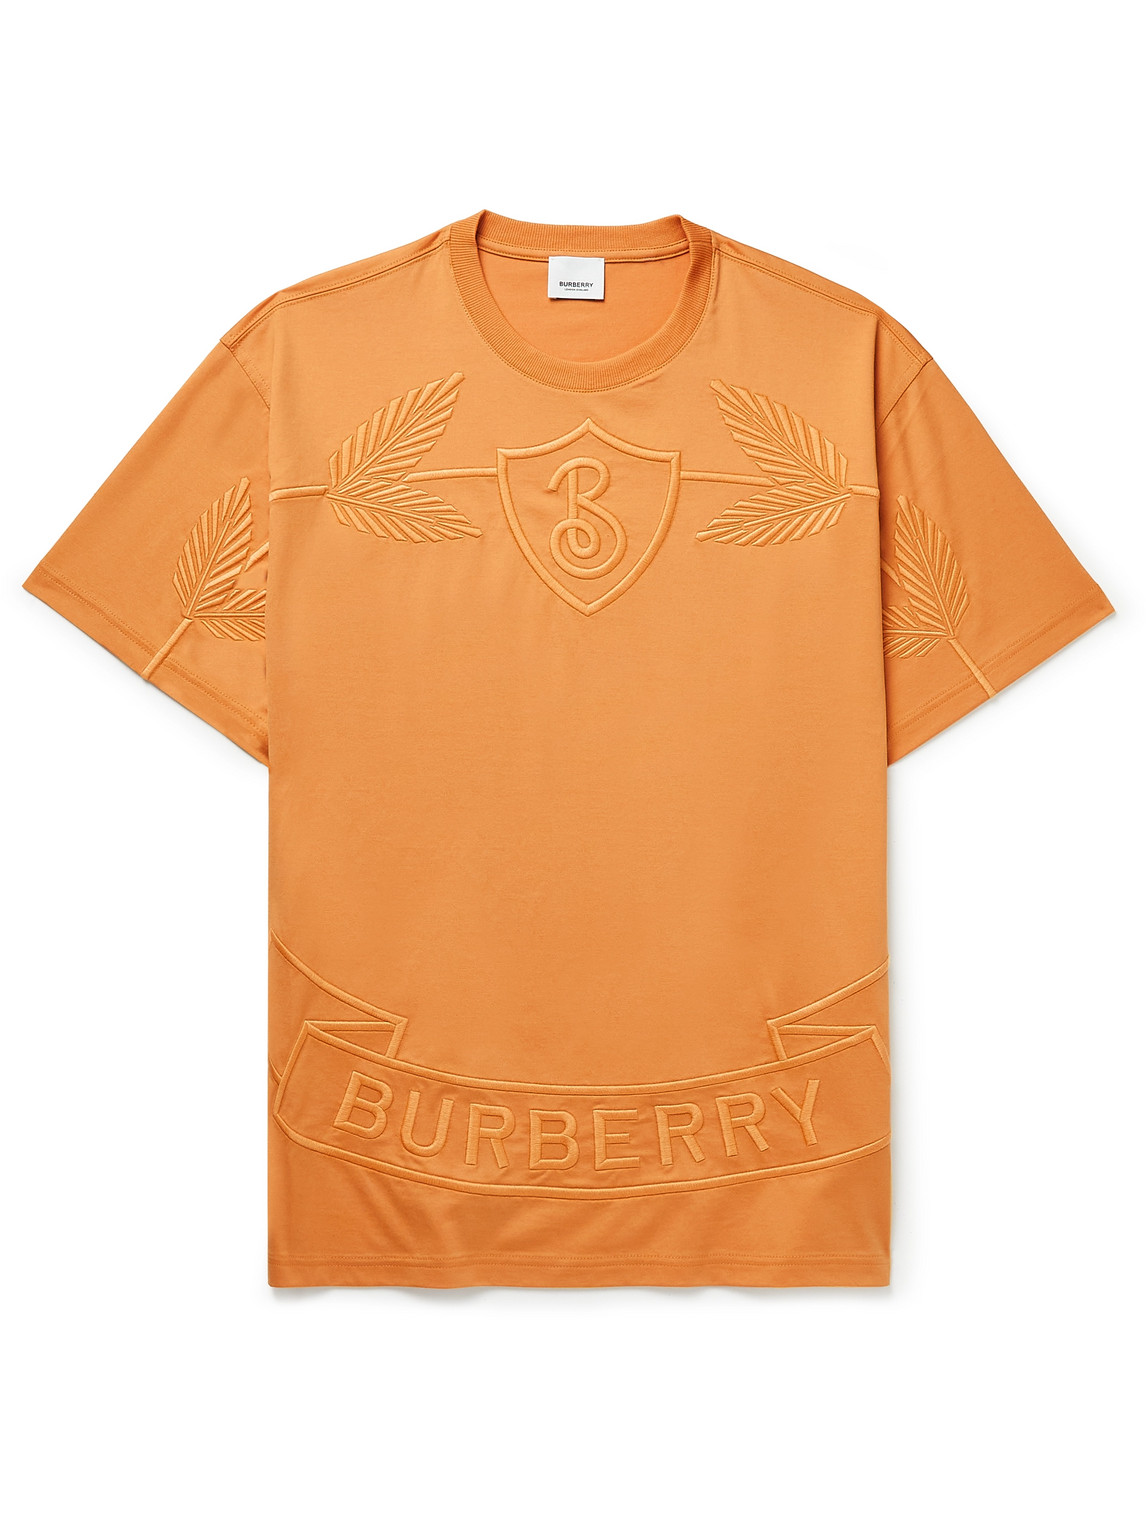 Burberry Oak Leaf Crest 刺绣t恤 In Orange